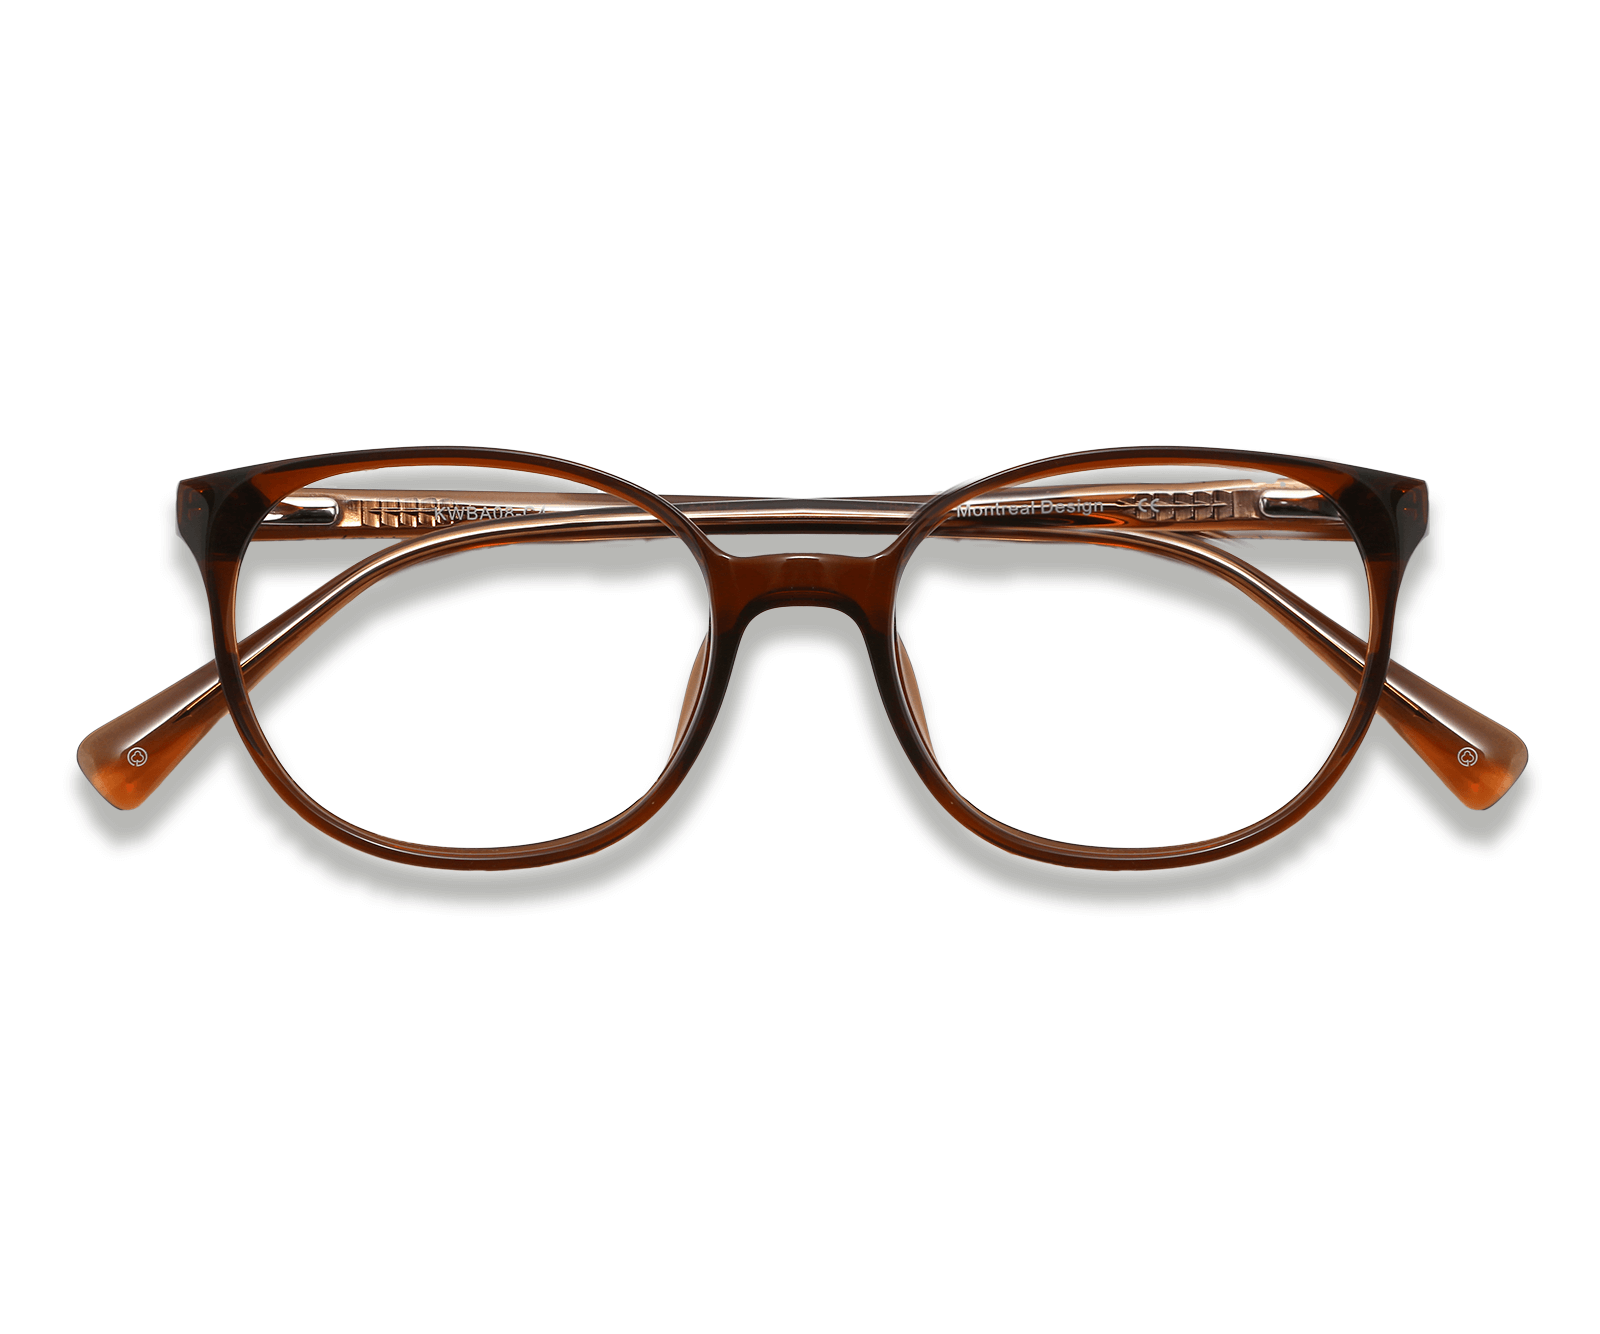 Kraywoods Ash, Vintage Aviator Sunglasses made from Walnut Wood and 100% UV Protection, Polarized Lenses